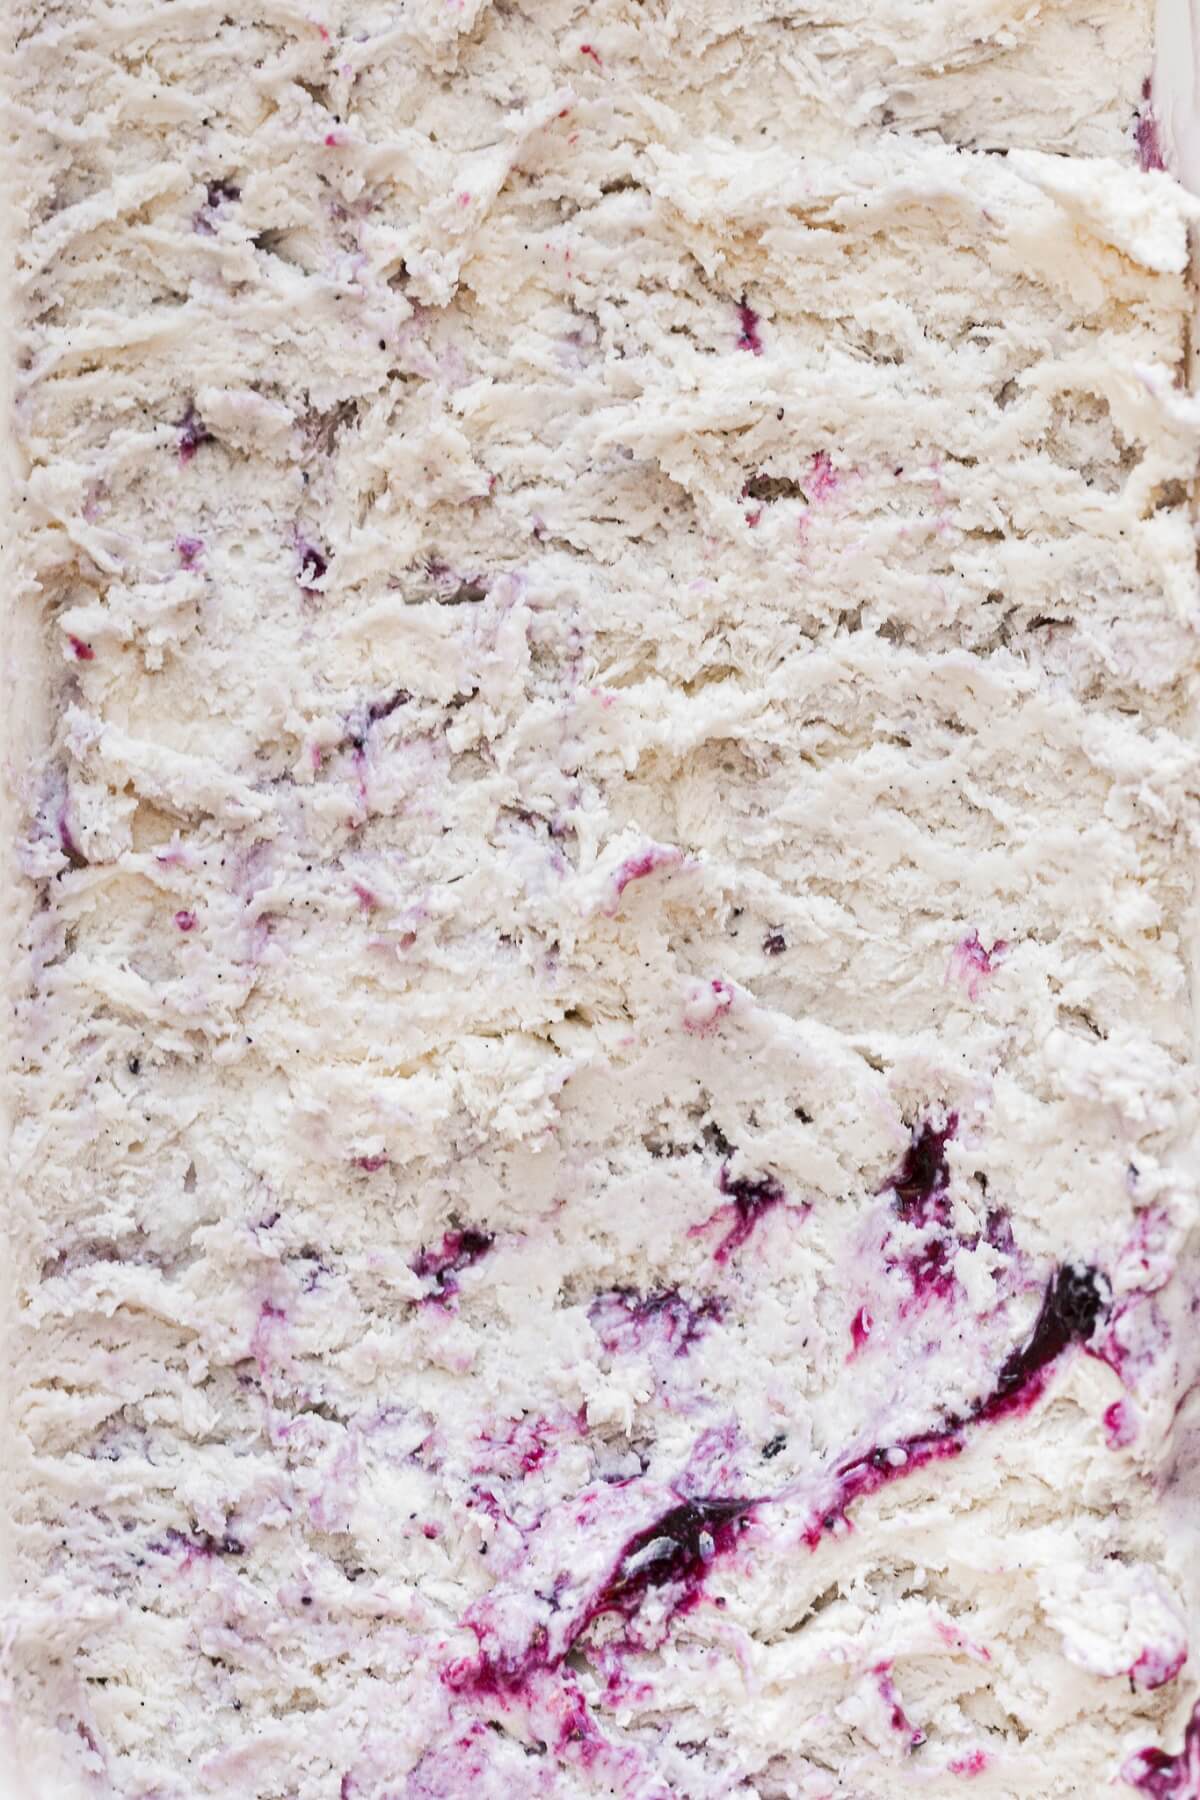 Closeup of blueberry swirl ice cream.